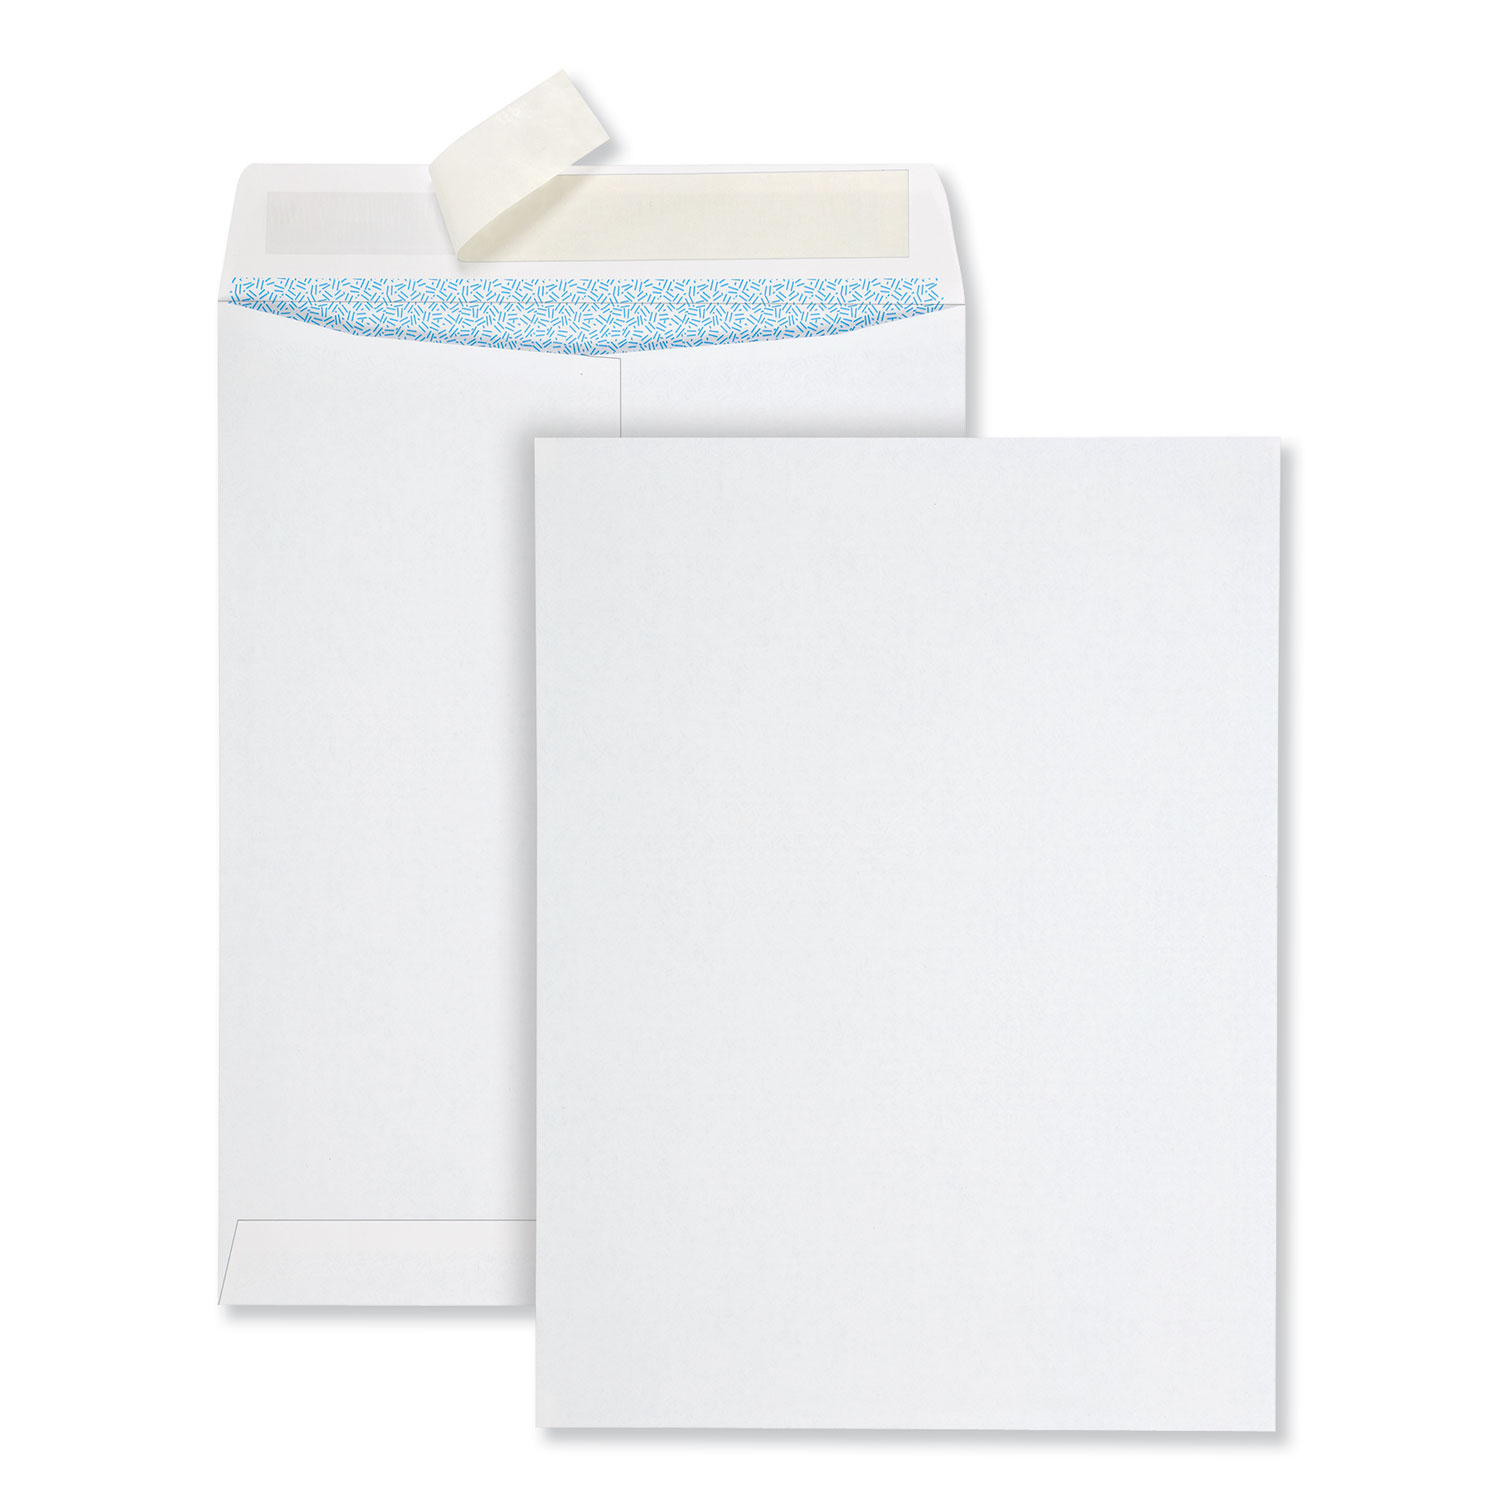 Redi-Strip Security Tinted Envelope, #10 1/2, Square Flap, Redi-Strip Closure, 9 x 12, White, 500/Box